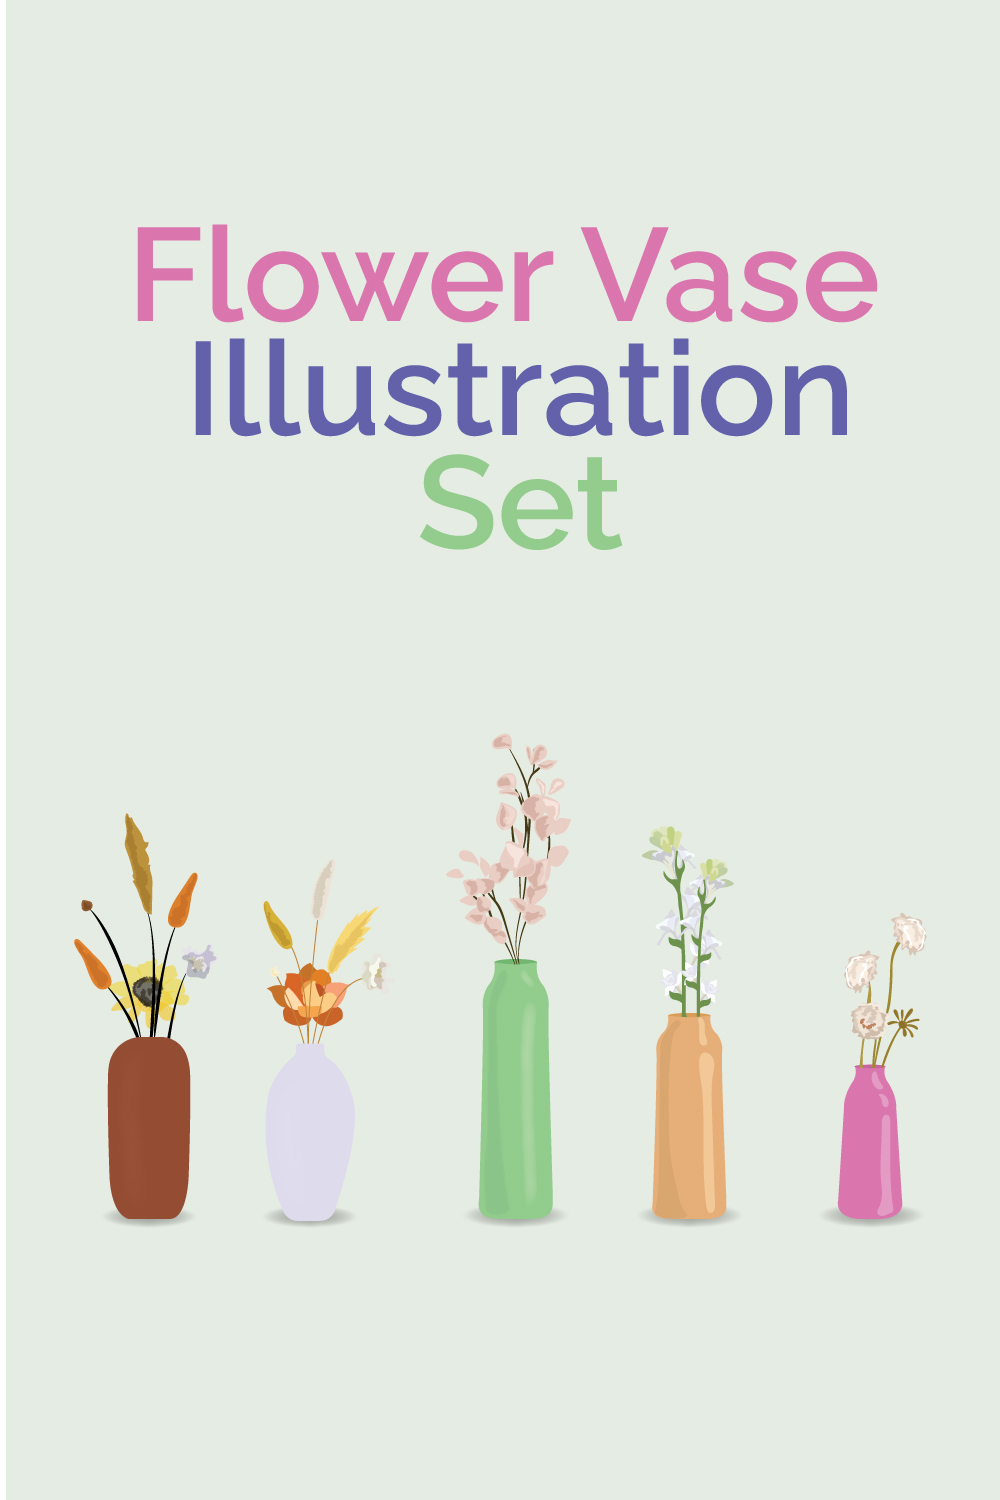 Flower Vase Illustration Set pinterest preview image.